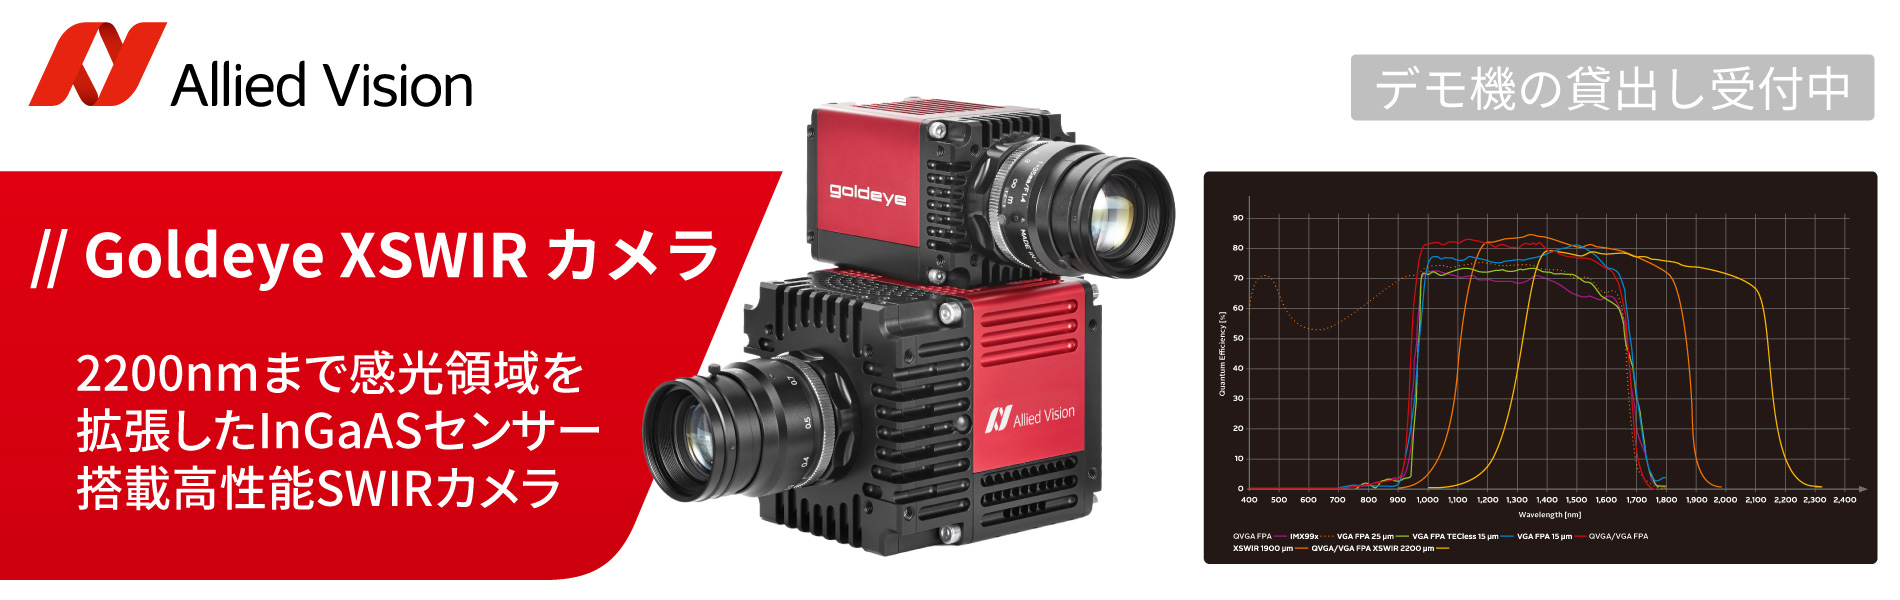 Allied Vision Goldeye XSWIRカメラ 感光域拡張センサー搭載 SWIR カメラ